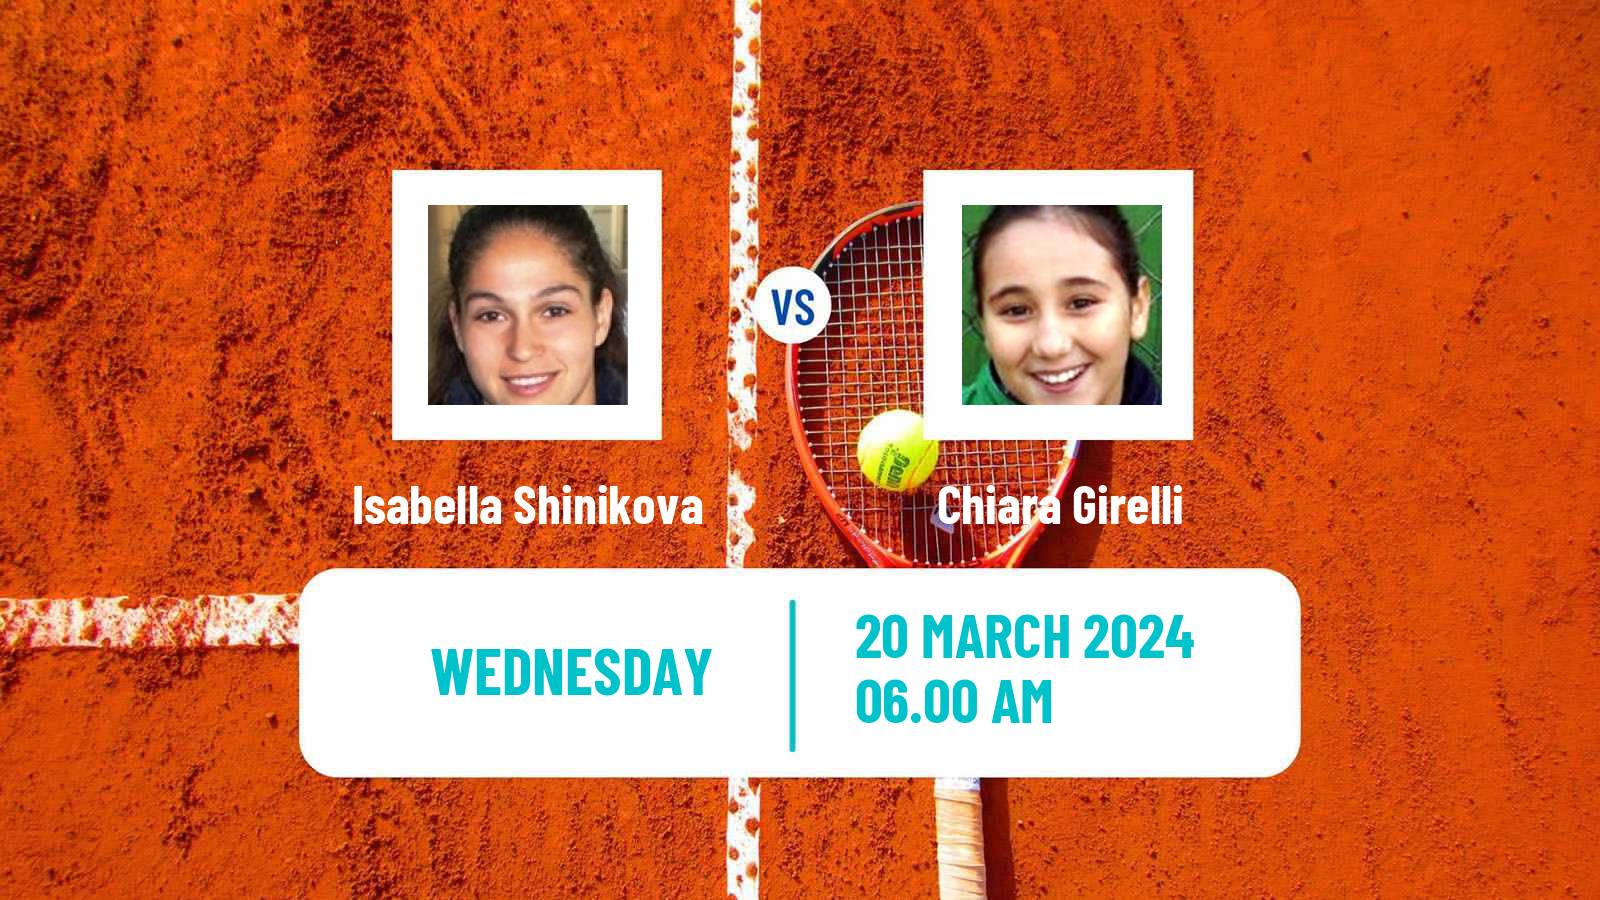 Tennis ITF W15 Monastir 10 Women Isabella Shinikova - Chiara Girelli